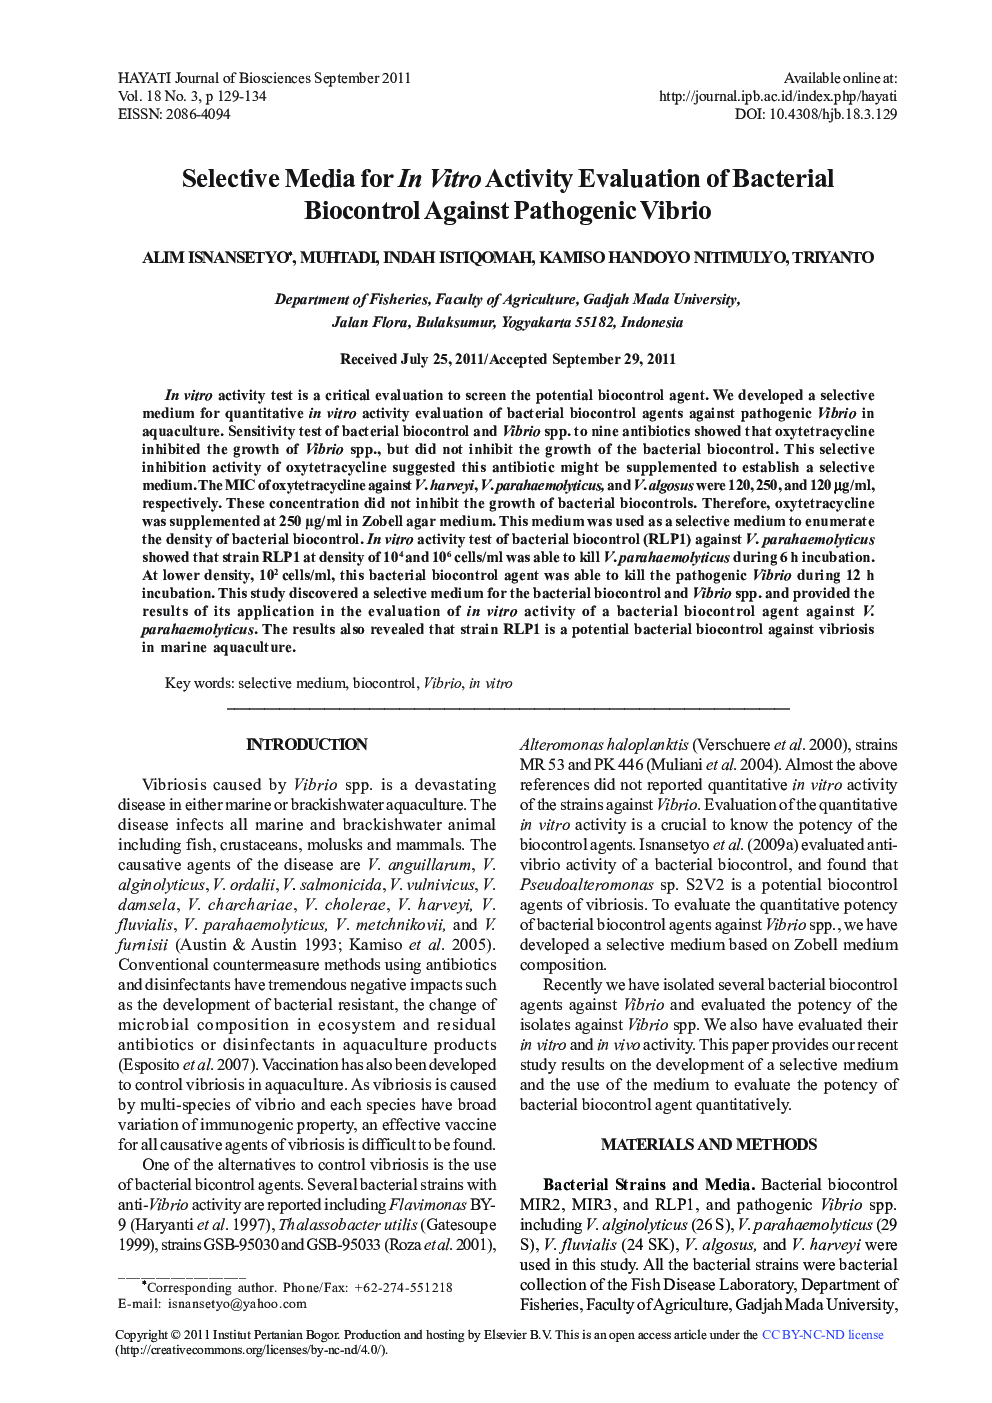 Selective Media for In Vitro Activity Evaluation of Bacterial Biocontrol Against Pathogenic Vibrio